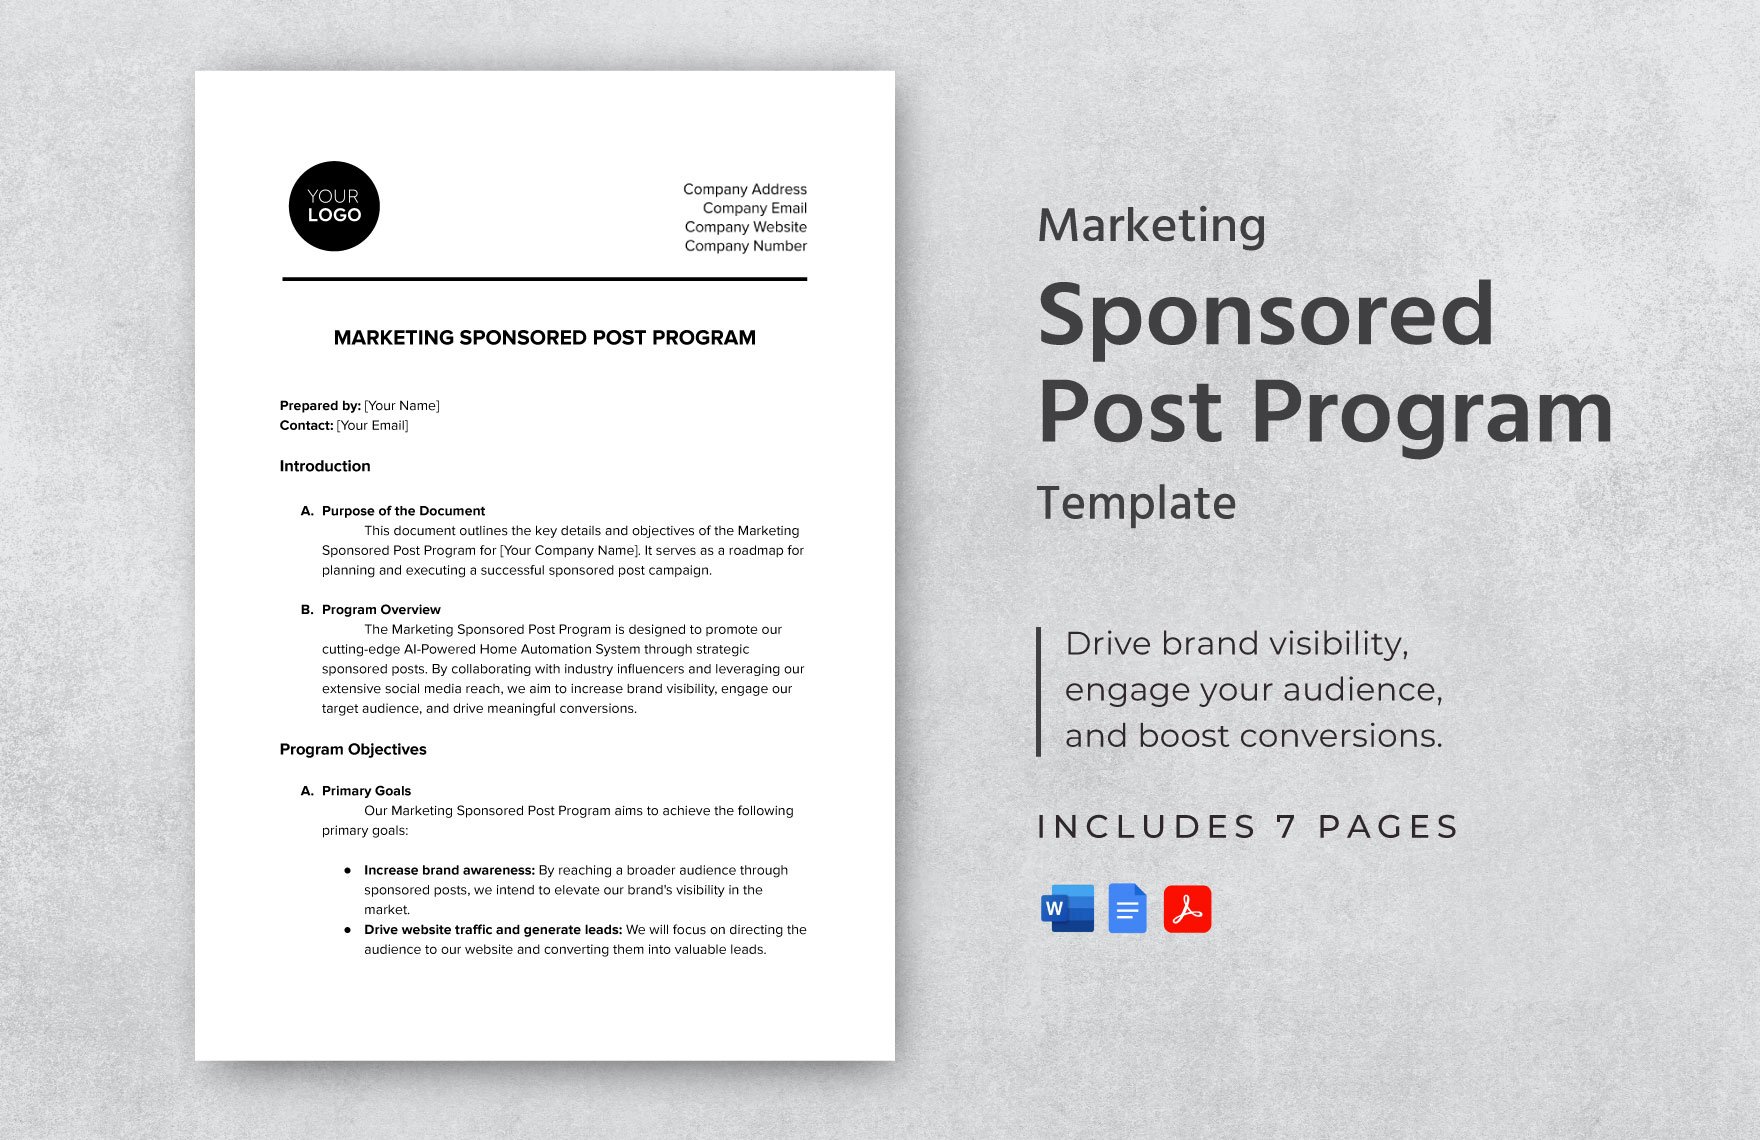 Marketing Sponsored Post Program Template in Word, Google Docs, PDF